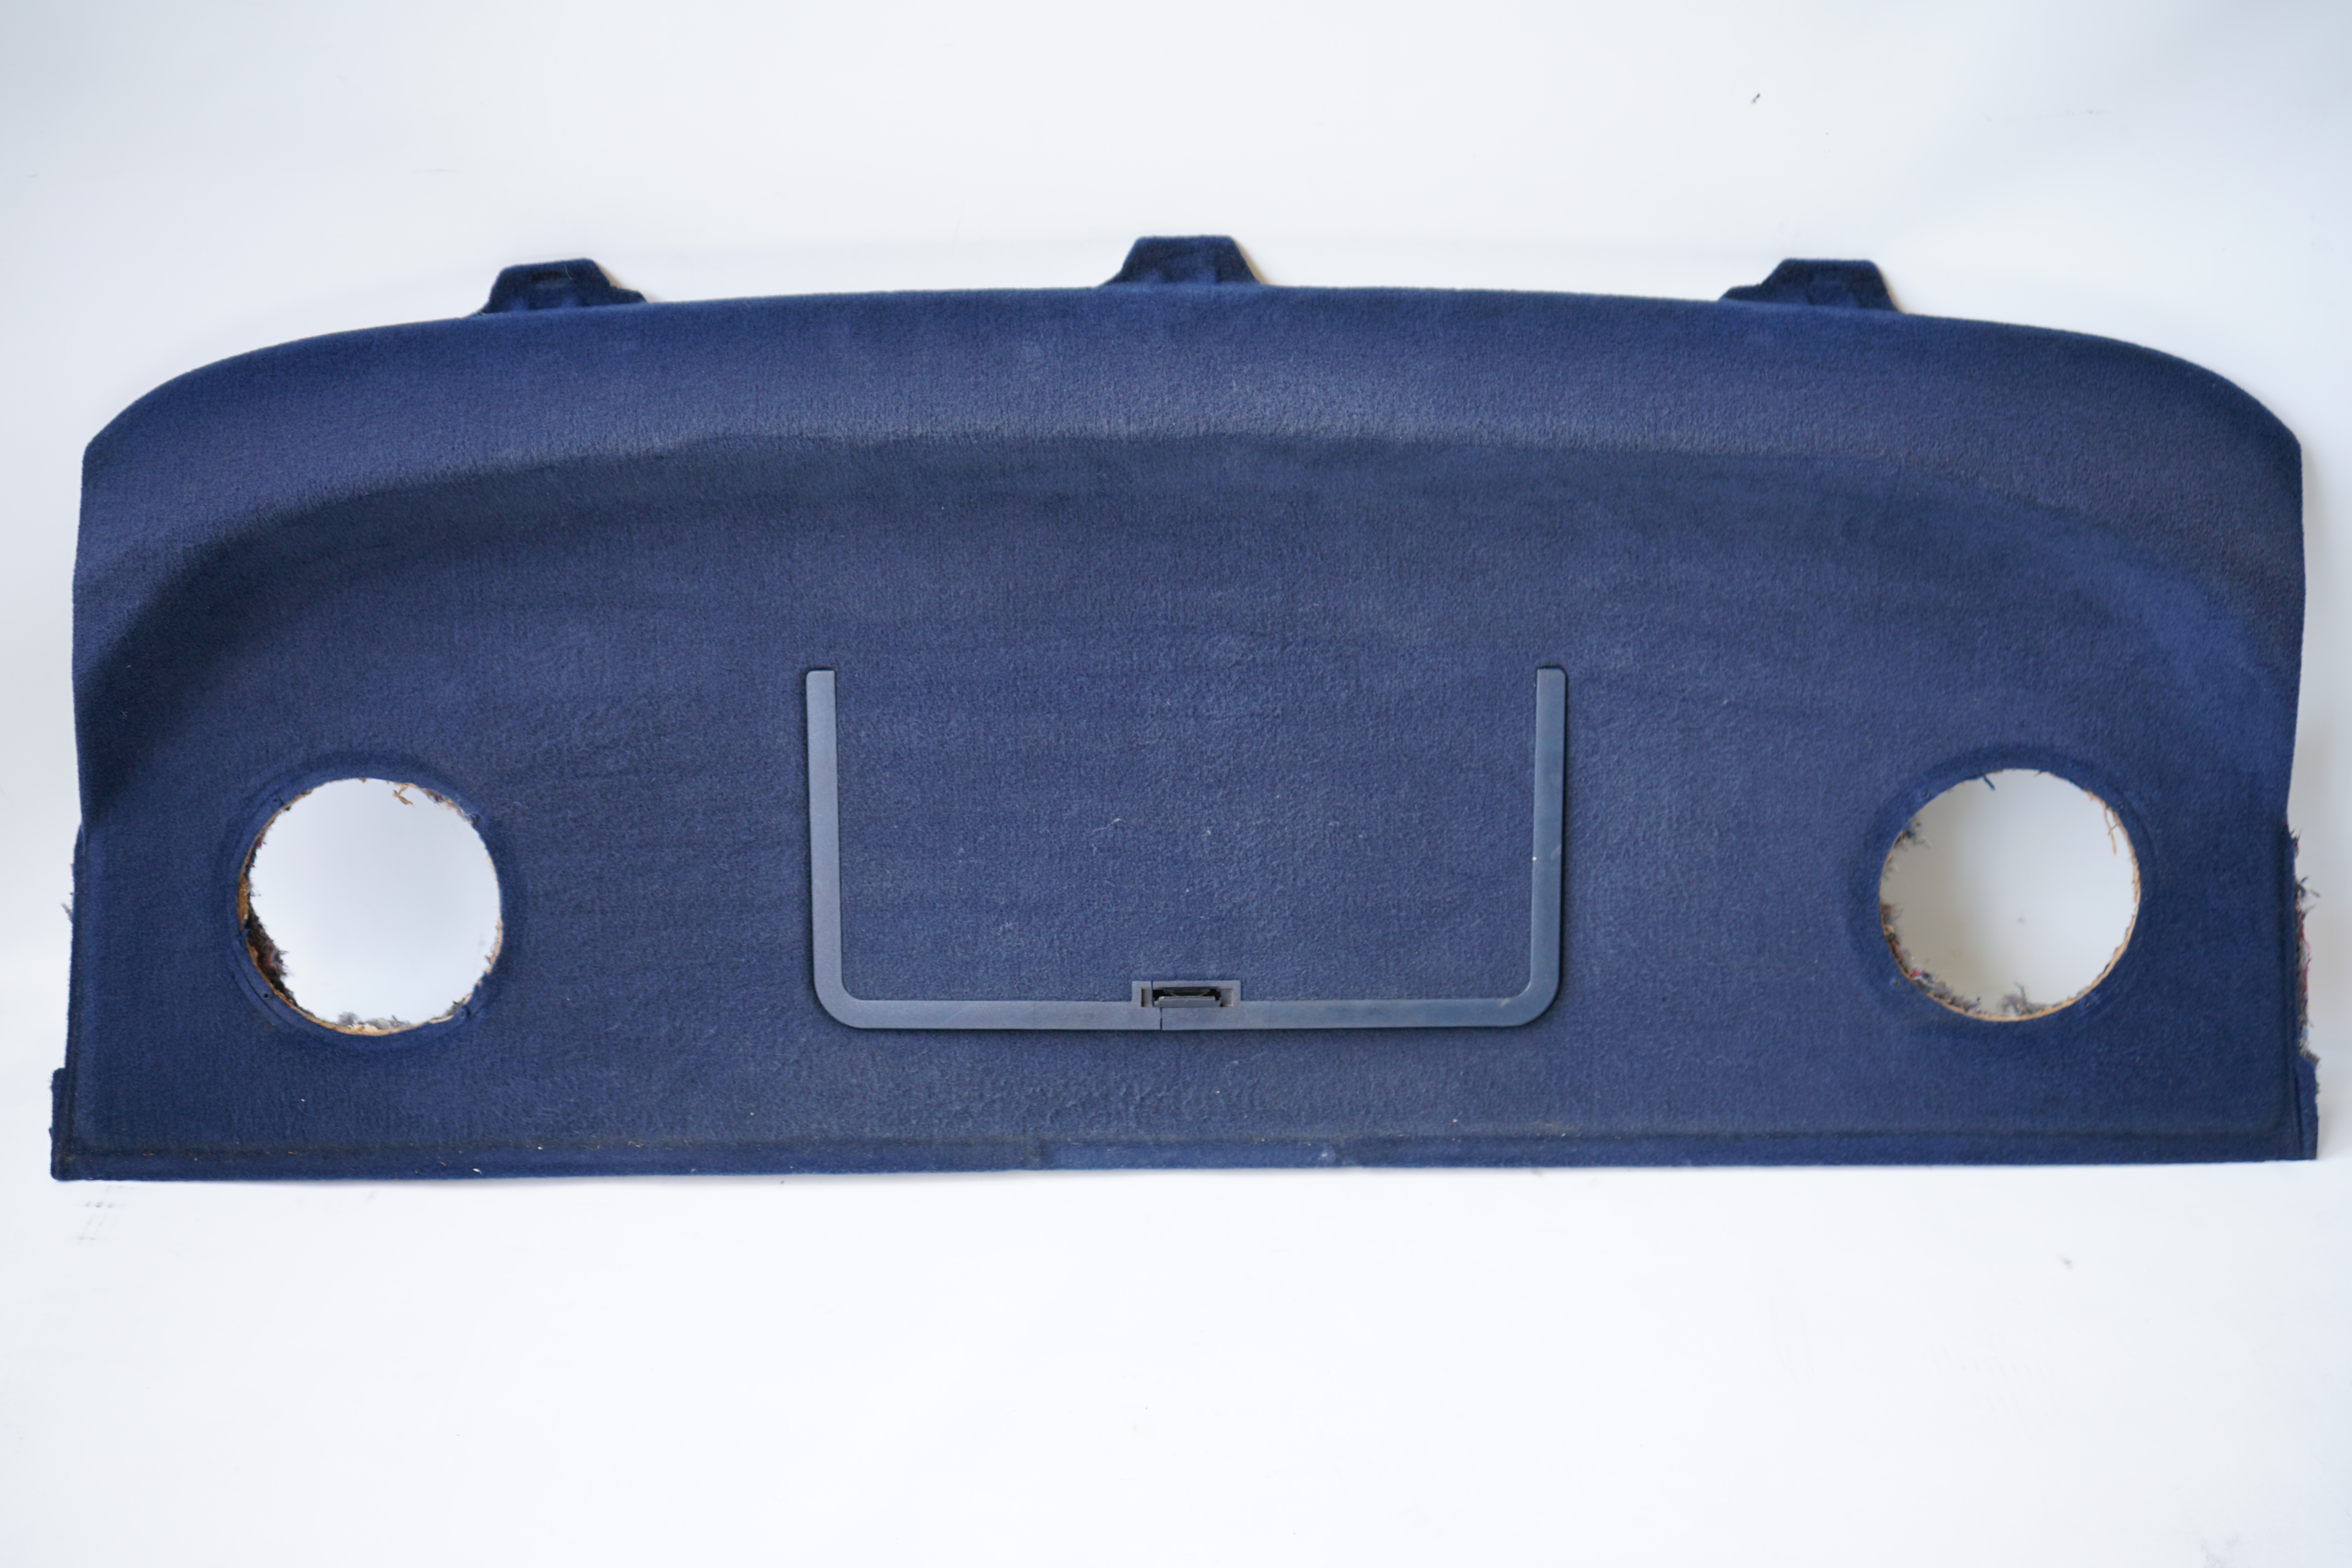 Verkleidung Rückwand oben ohne Kopfstützen/ Lautsprecher rund C124 Coupé 230CE - E320 E-Klasse Hutablage A1246901049 5090 blau